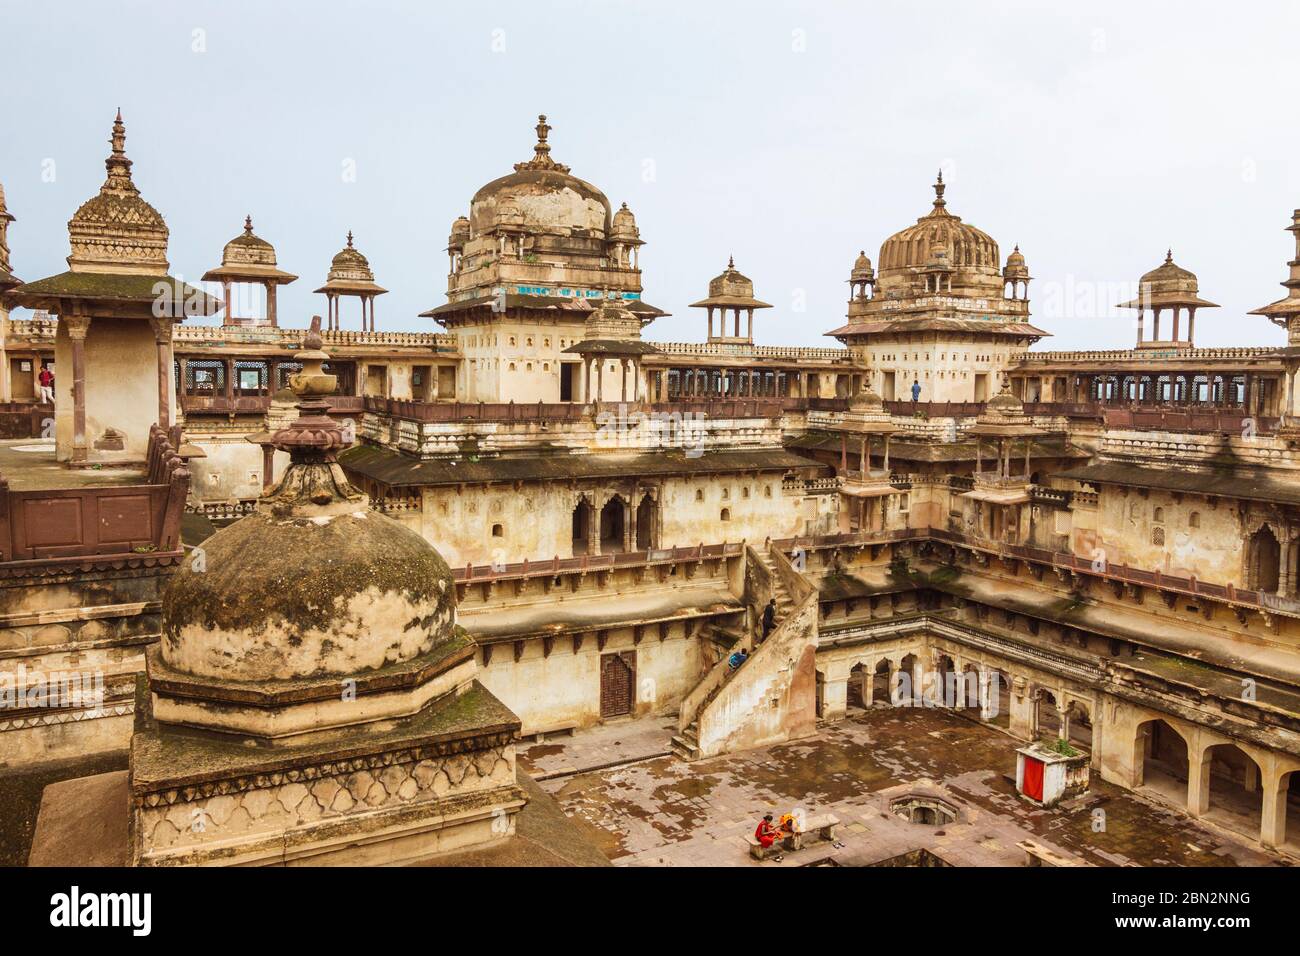 Orchha, Madhya Pradesh, India : 17th century Jahangir Mahal citadel within the Orchha Fort complex. Stock Photo